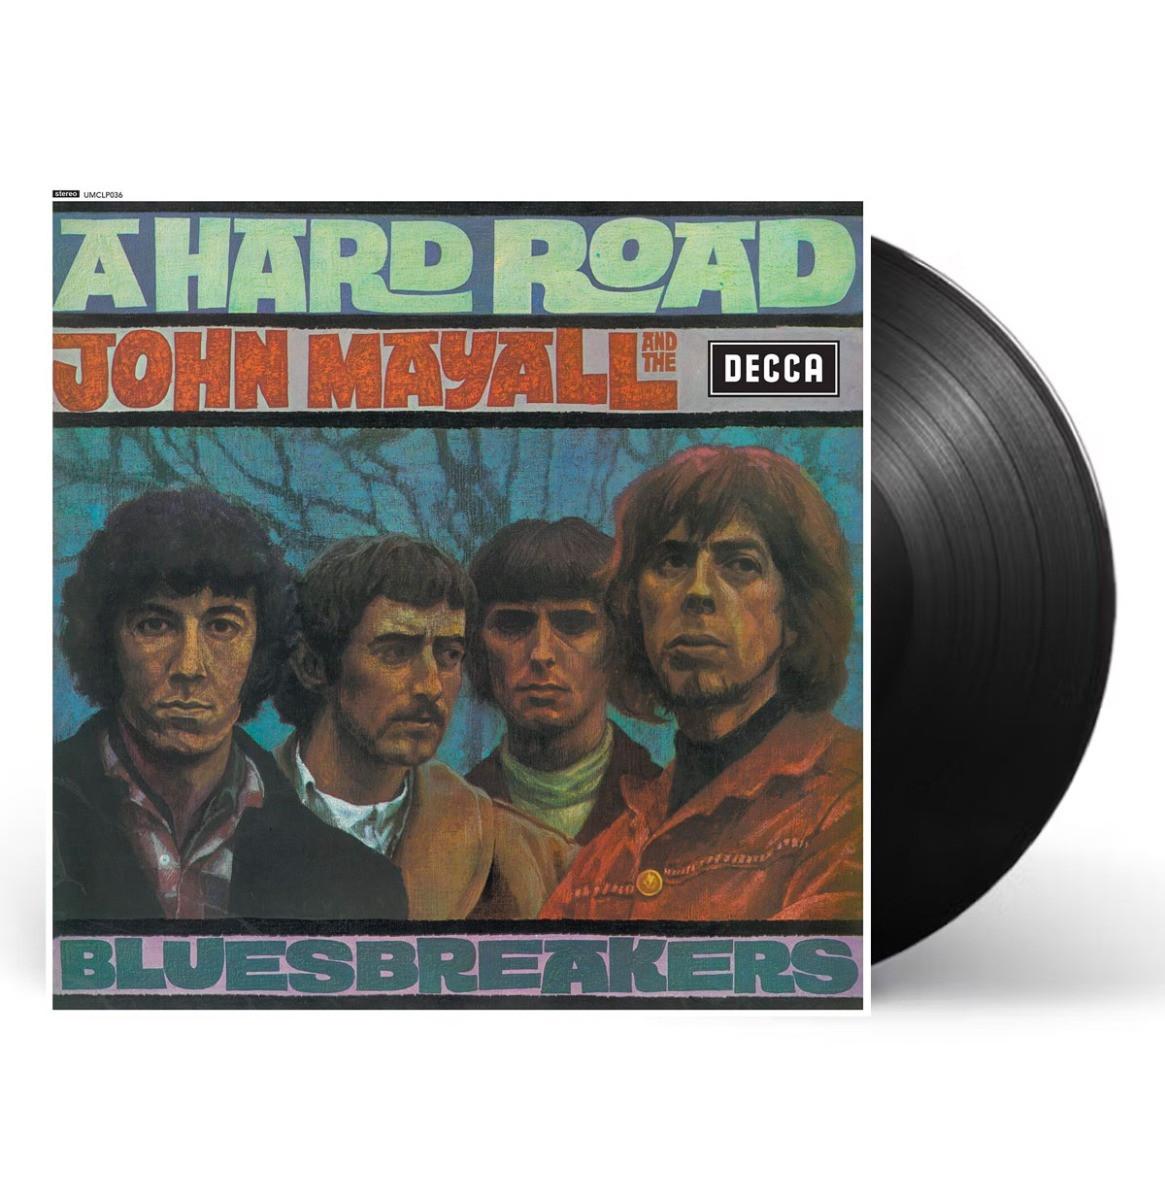 John Mayall And The Bluesbreakers - A Hard Road LP